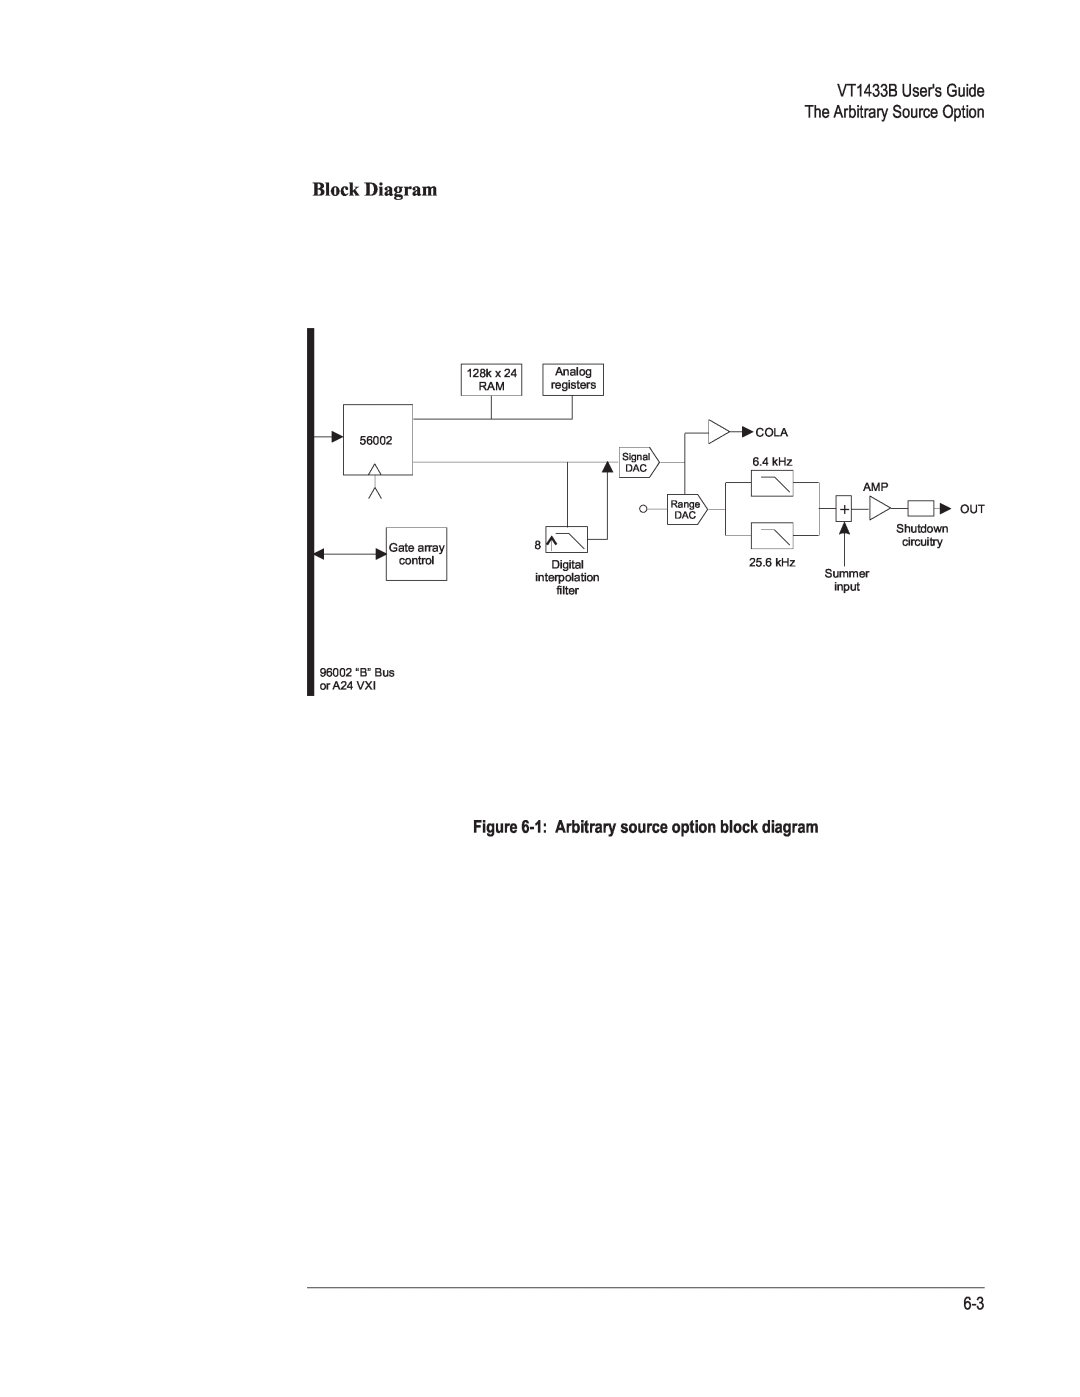 VXI Block Diagram, VT1433B Users Guide The Arbitrary Source Option, 1:Arbitrary source option block diagram, Signal 